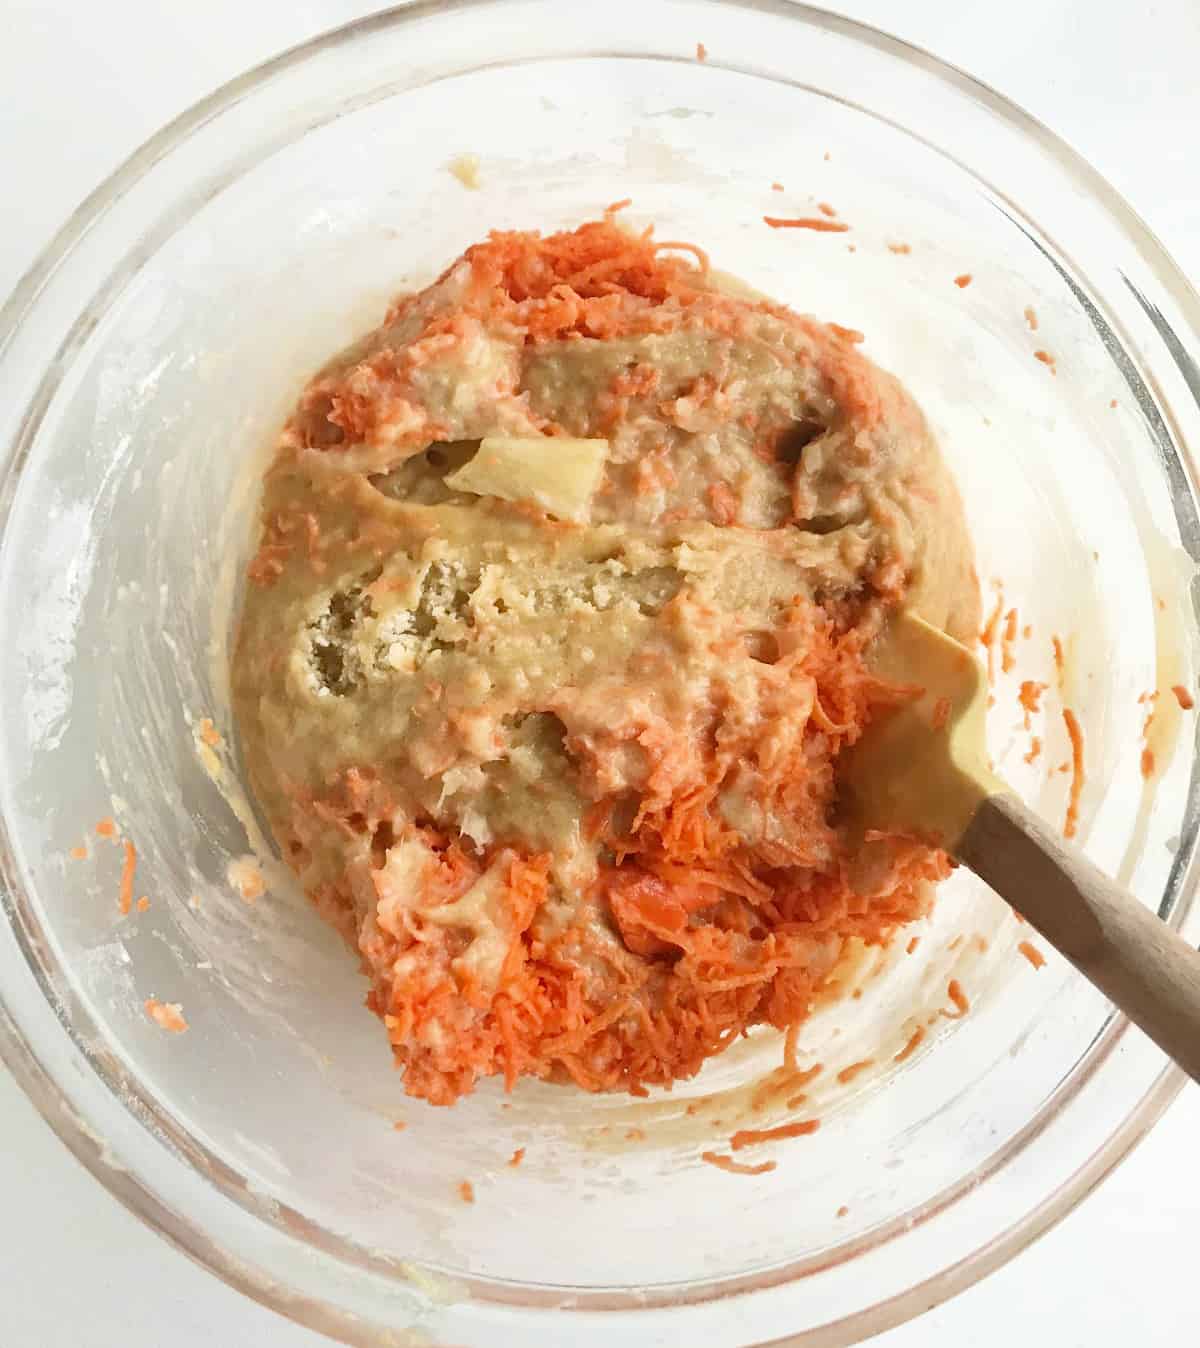 Adding shredded carrot and pineapple chunks to cake batter in glass bowl